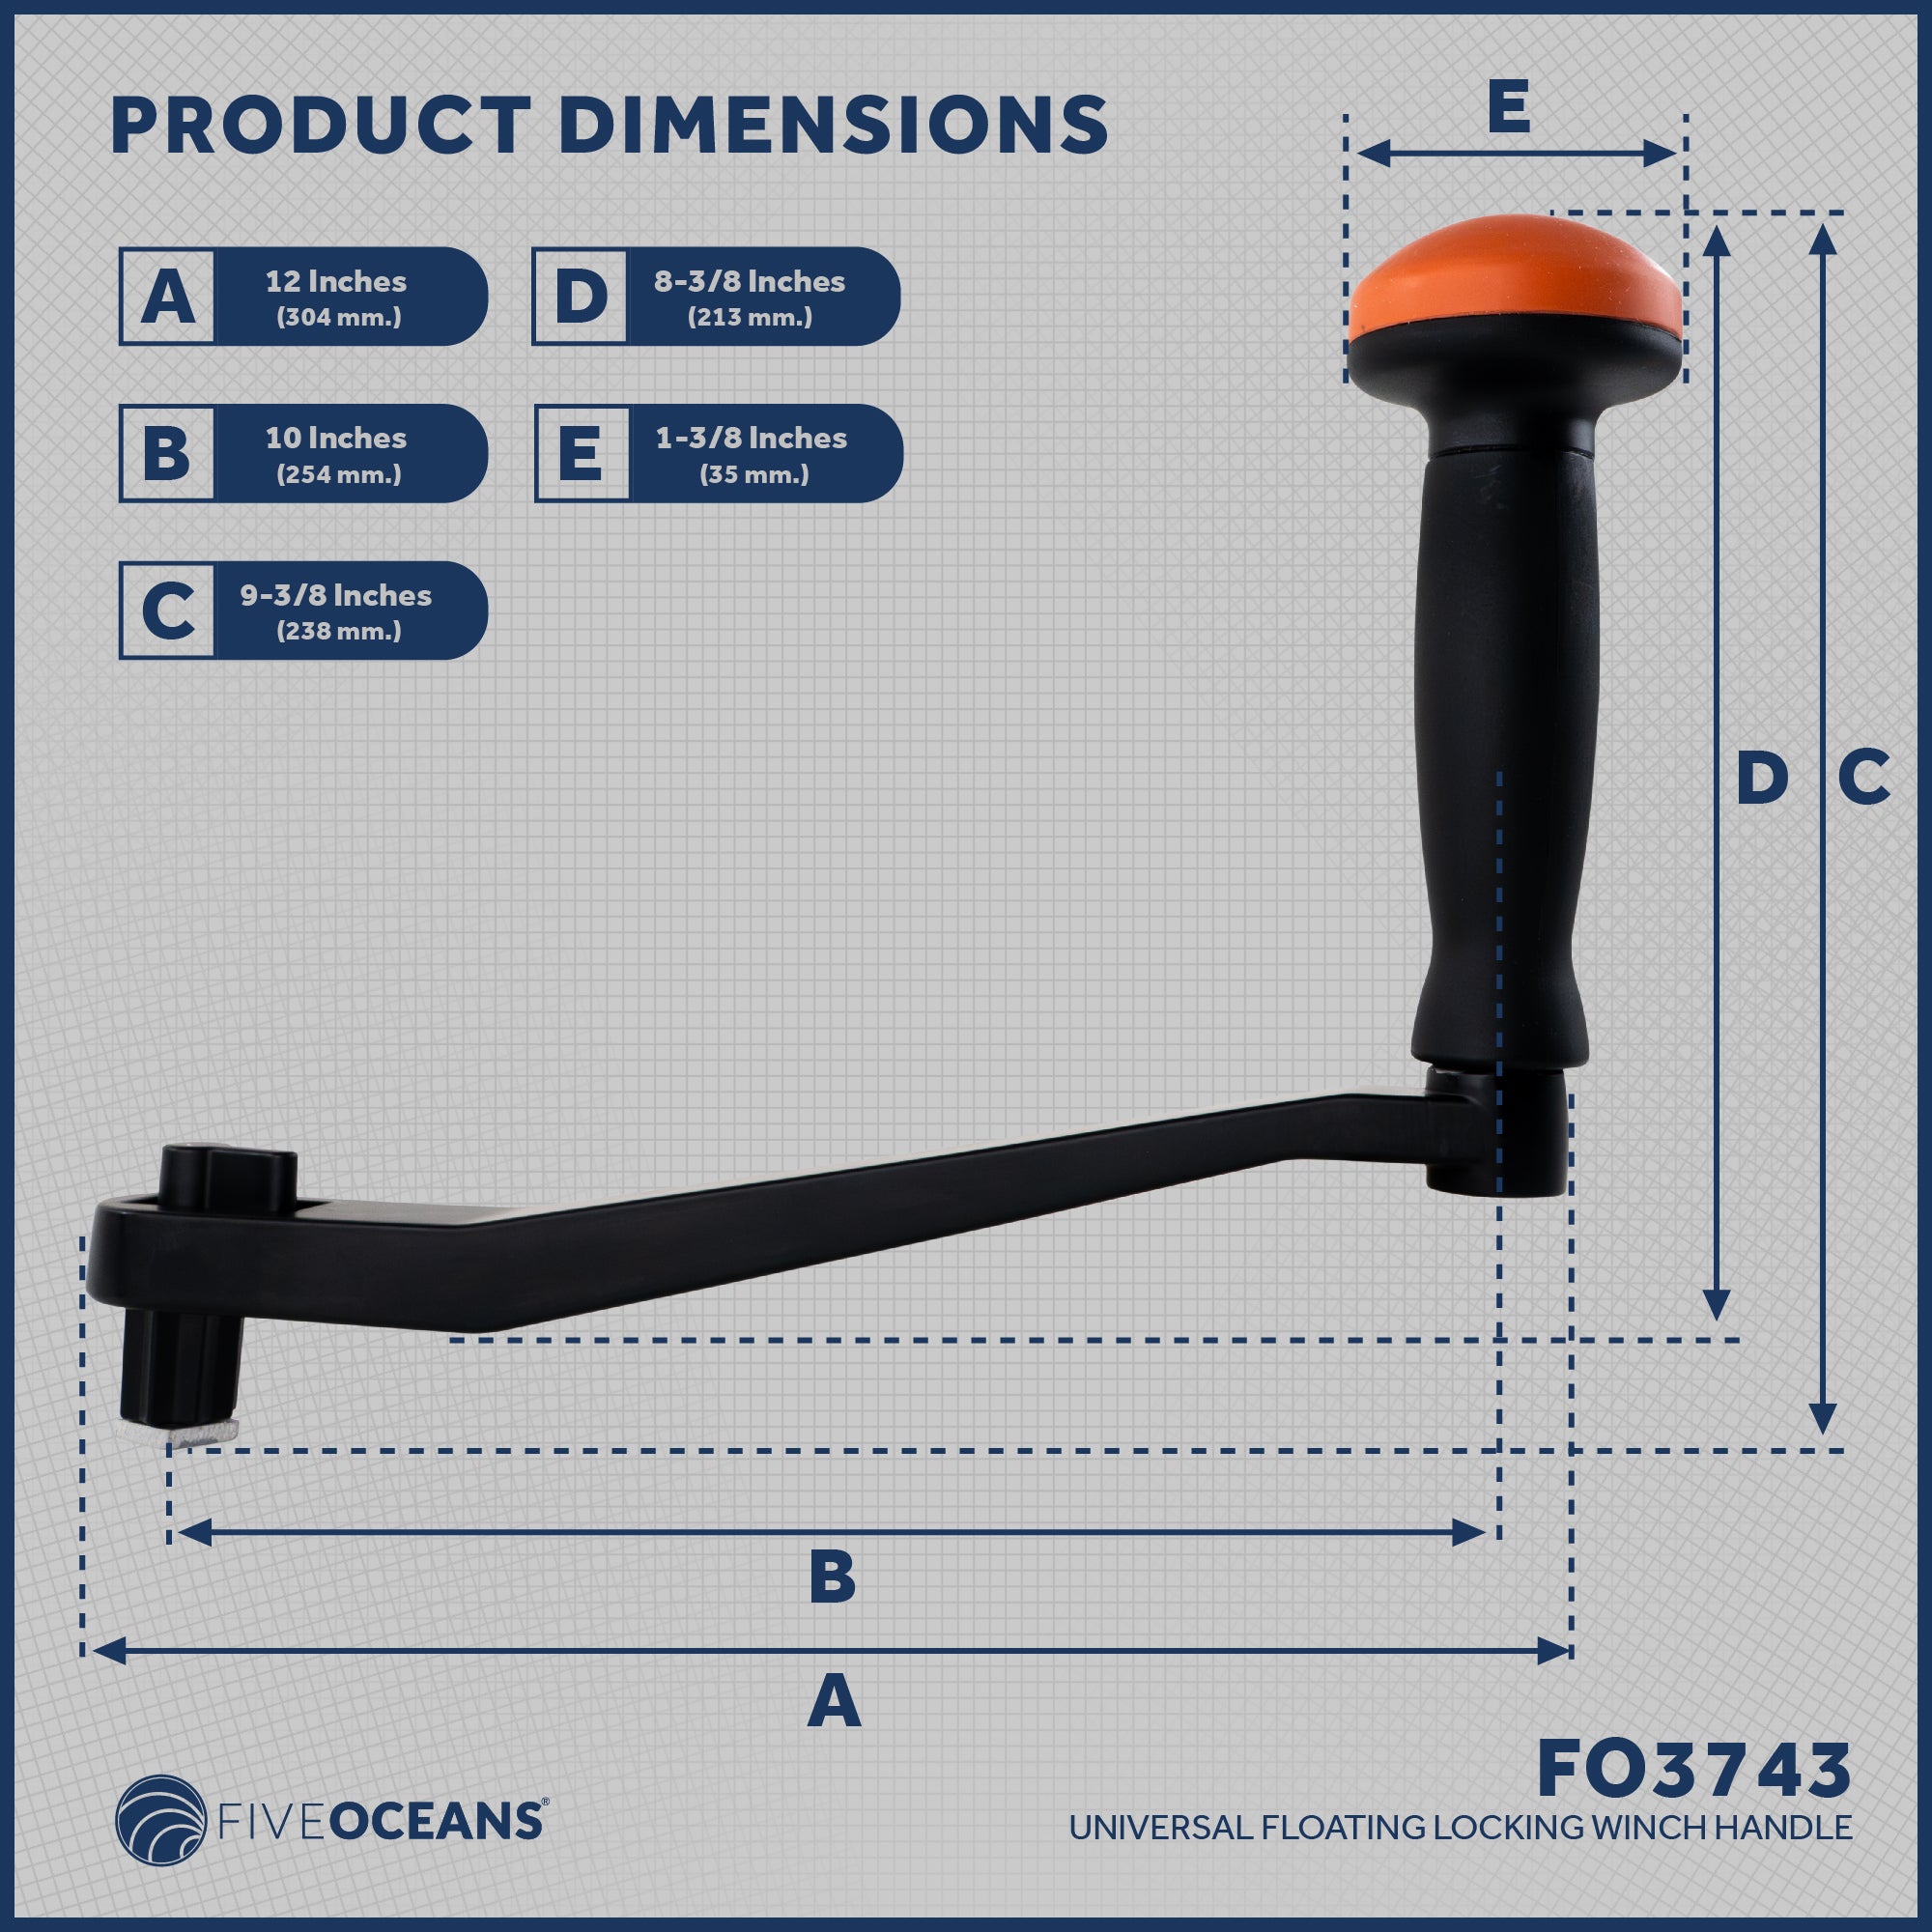 Universal Lock-in Style Winch Handle, 10" Black/Orange  - FO3743